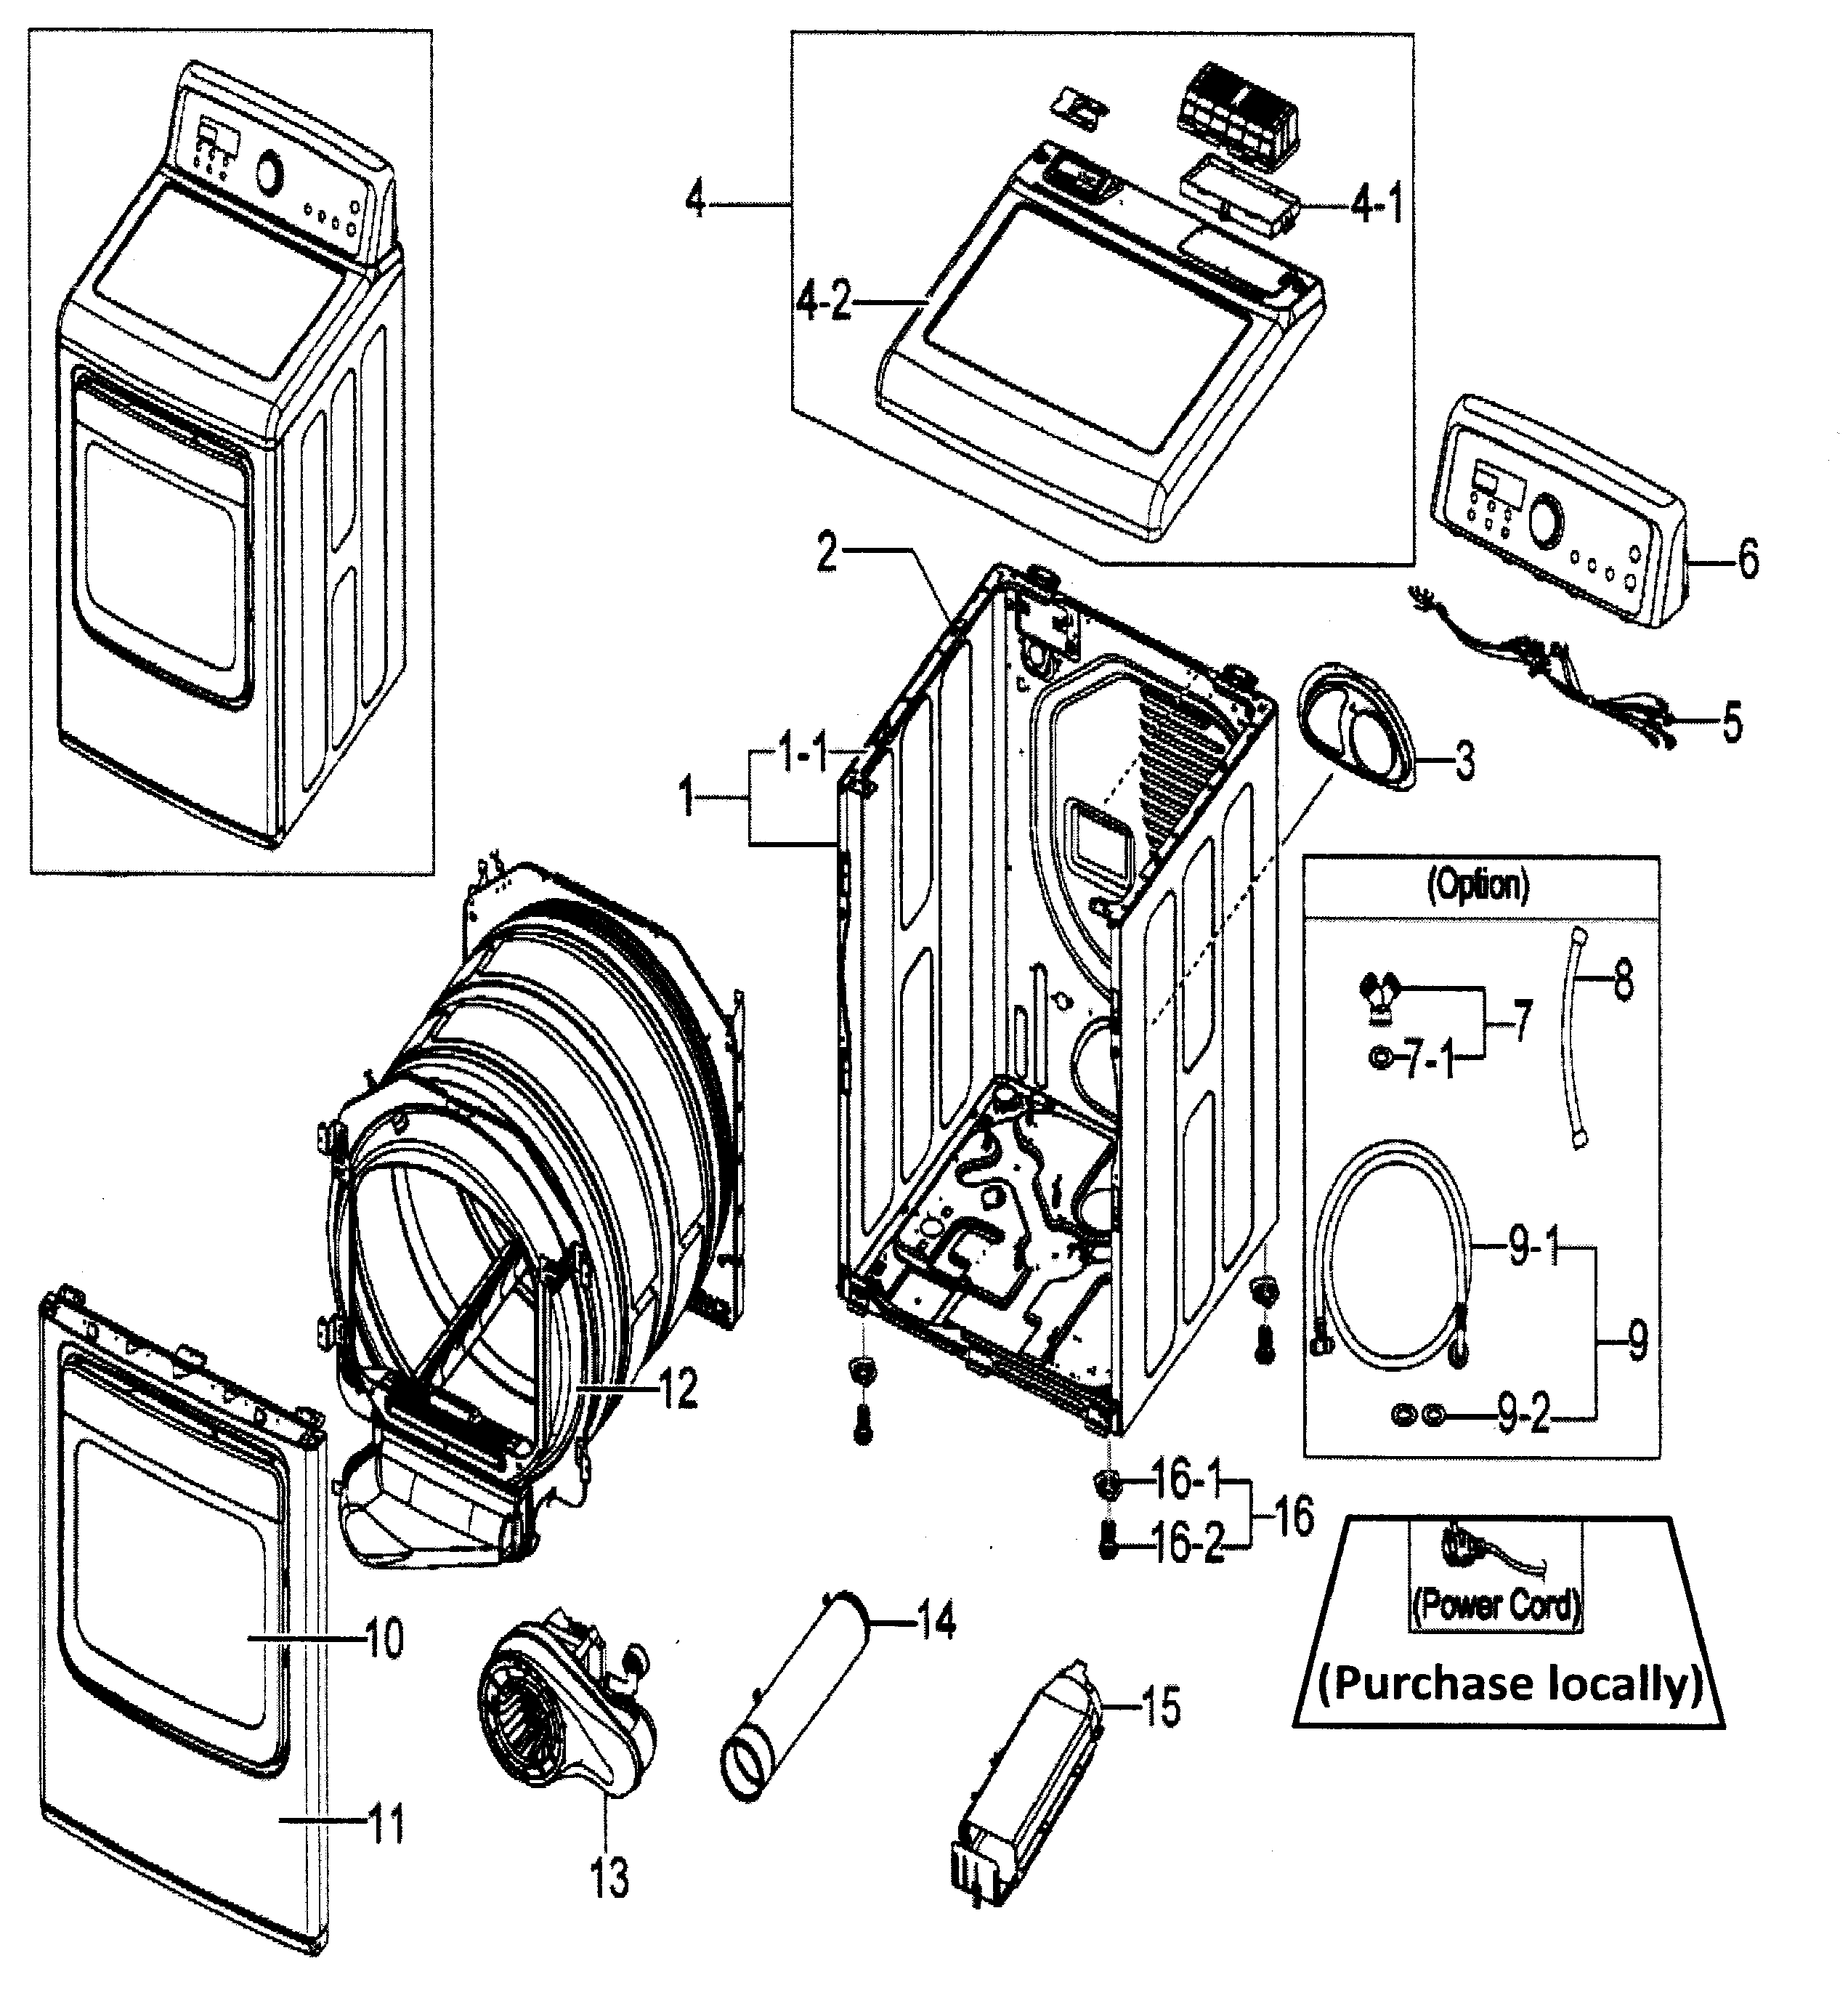 Samsung Dryer Parts Manual